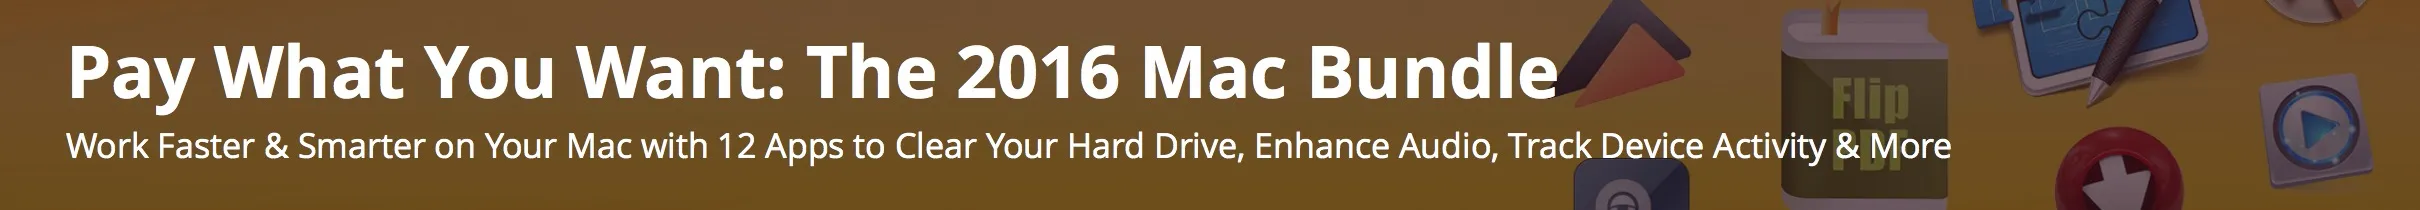 The 2016 Mac Bundle 3